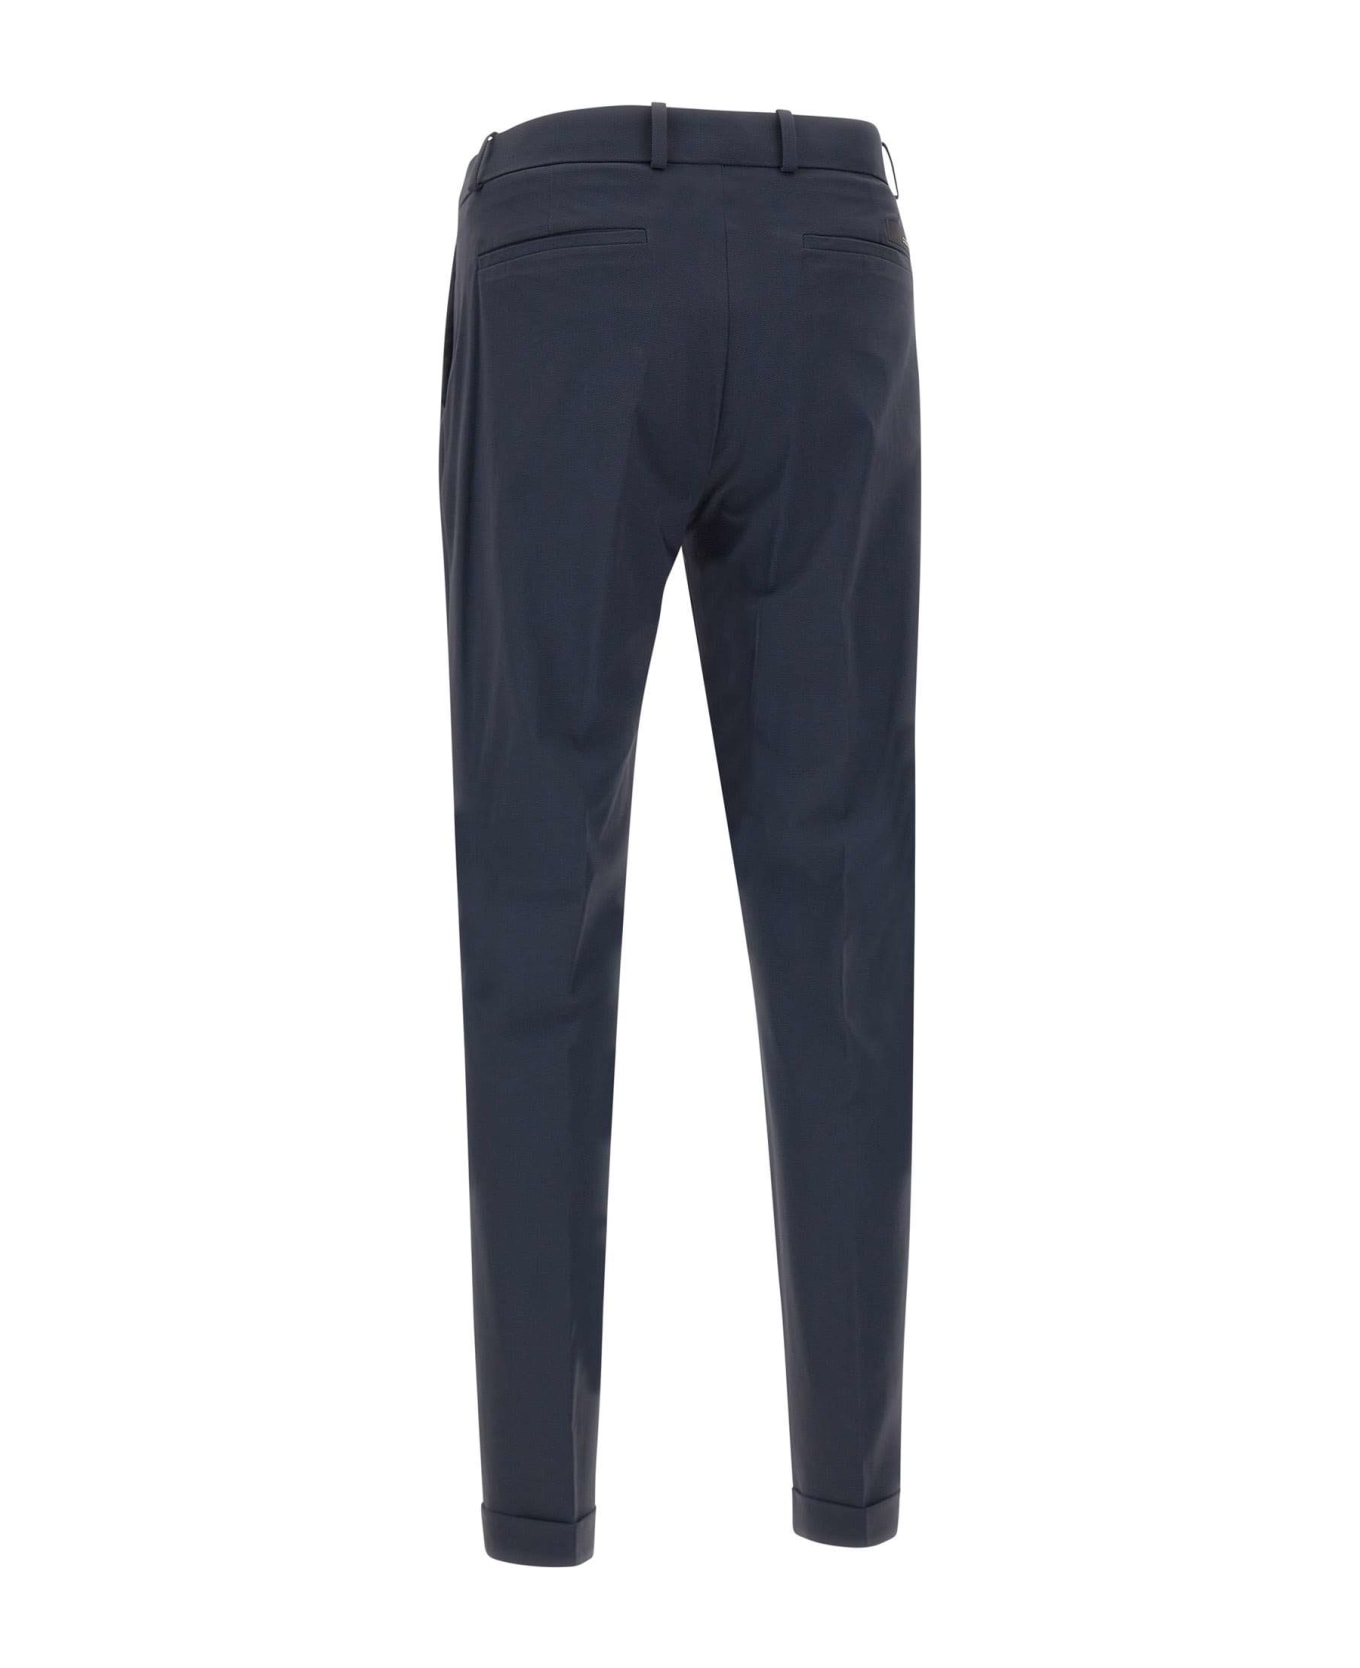 RRD - Roberto Ricci Design "micro Chino Pant" Men's Trousers - BLUE ボトムス